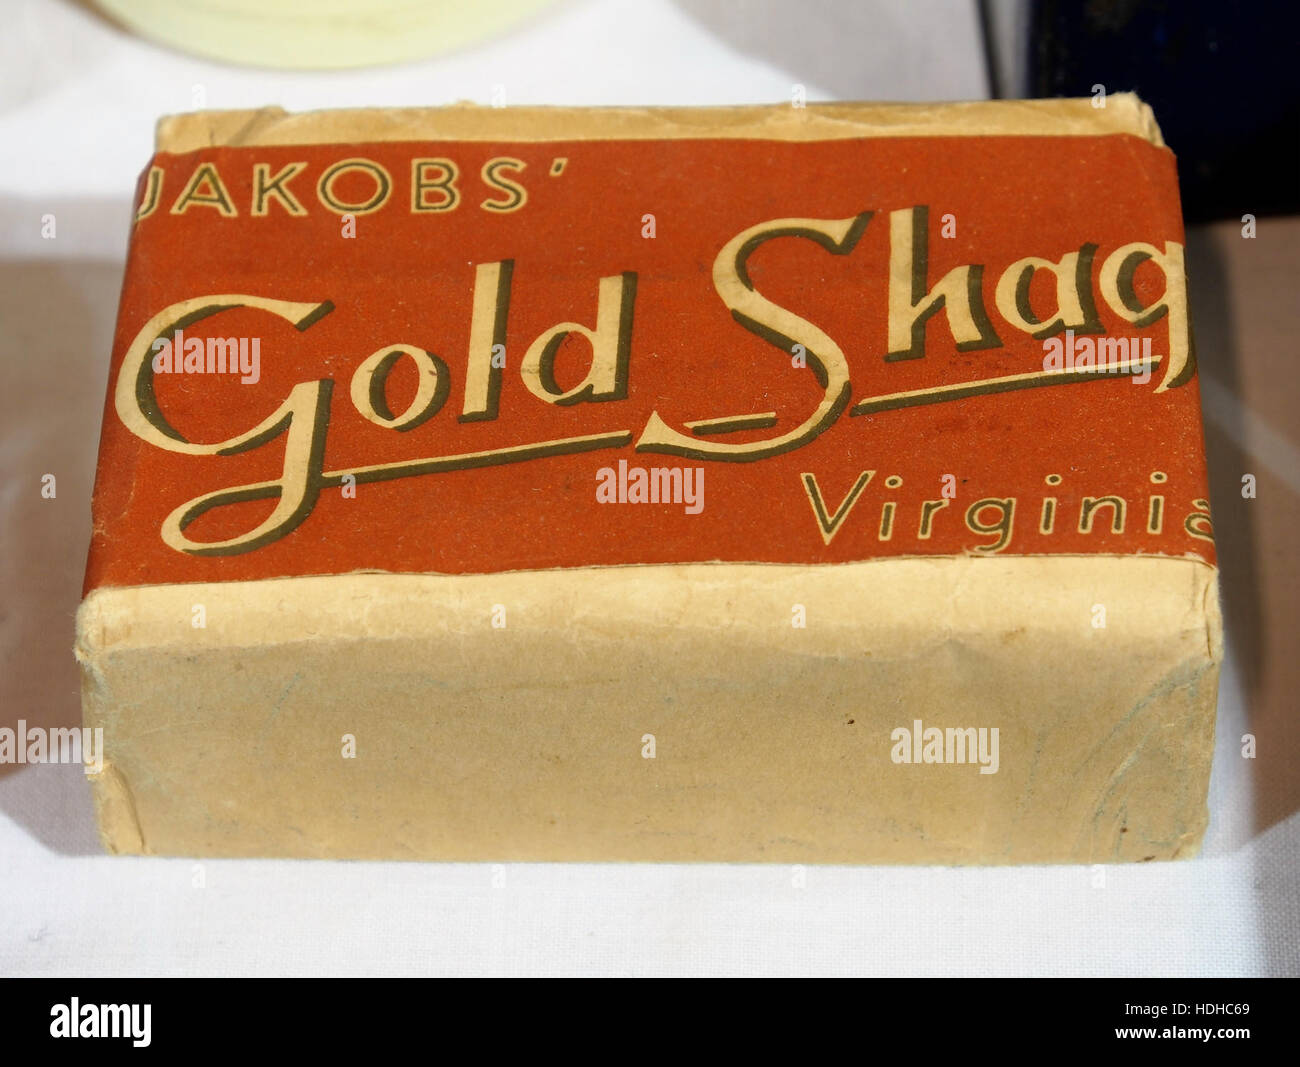 Jatos Golden Shag pak pic1 Foto Stock